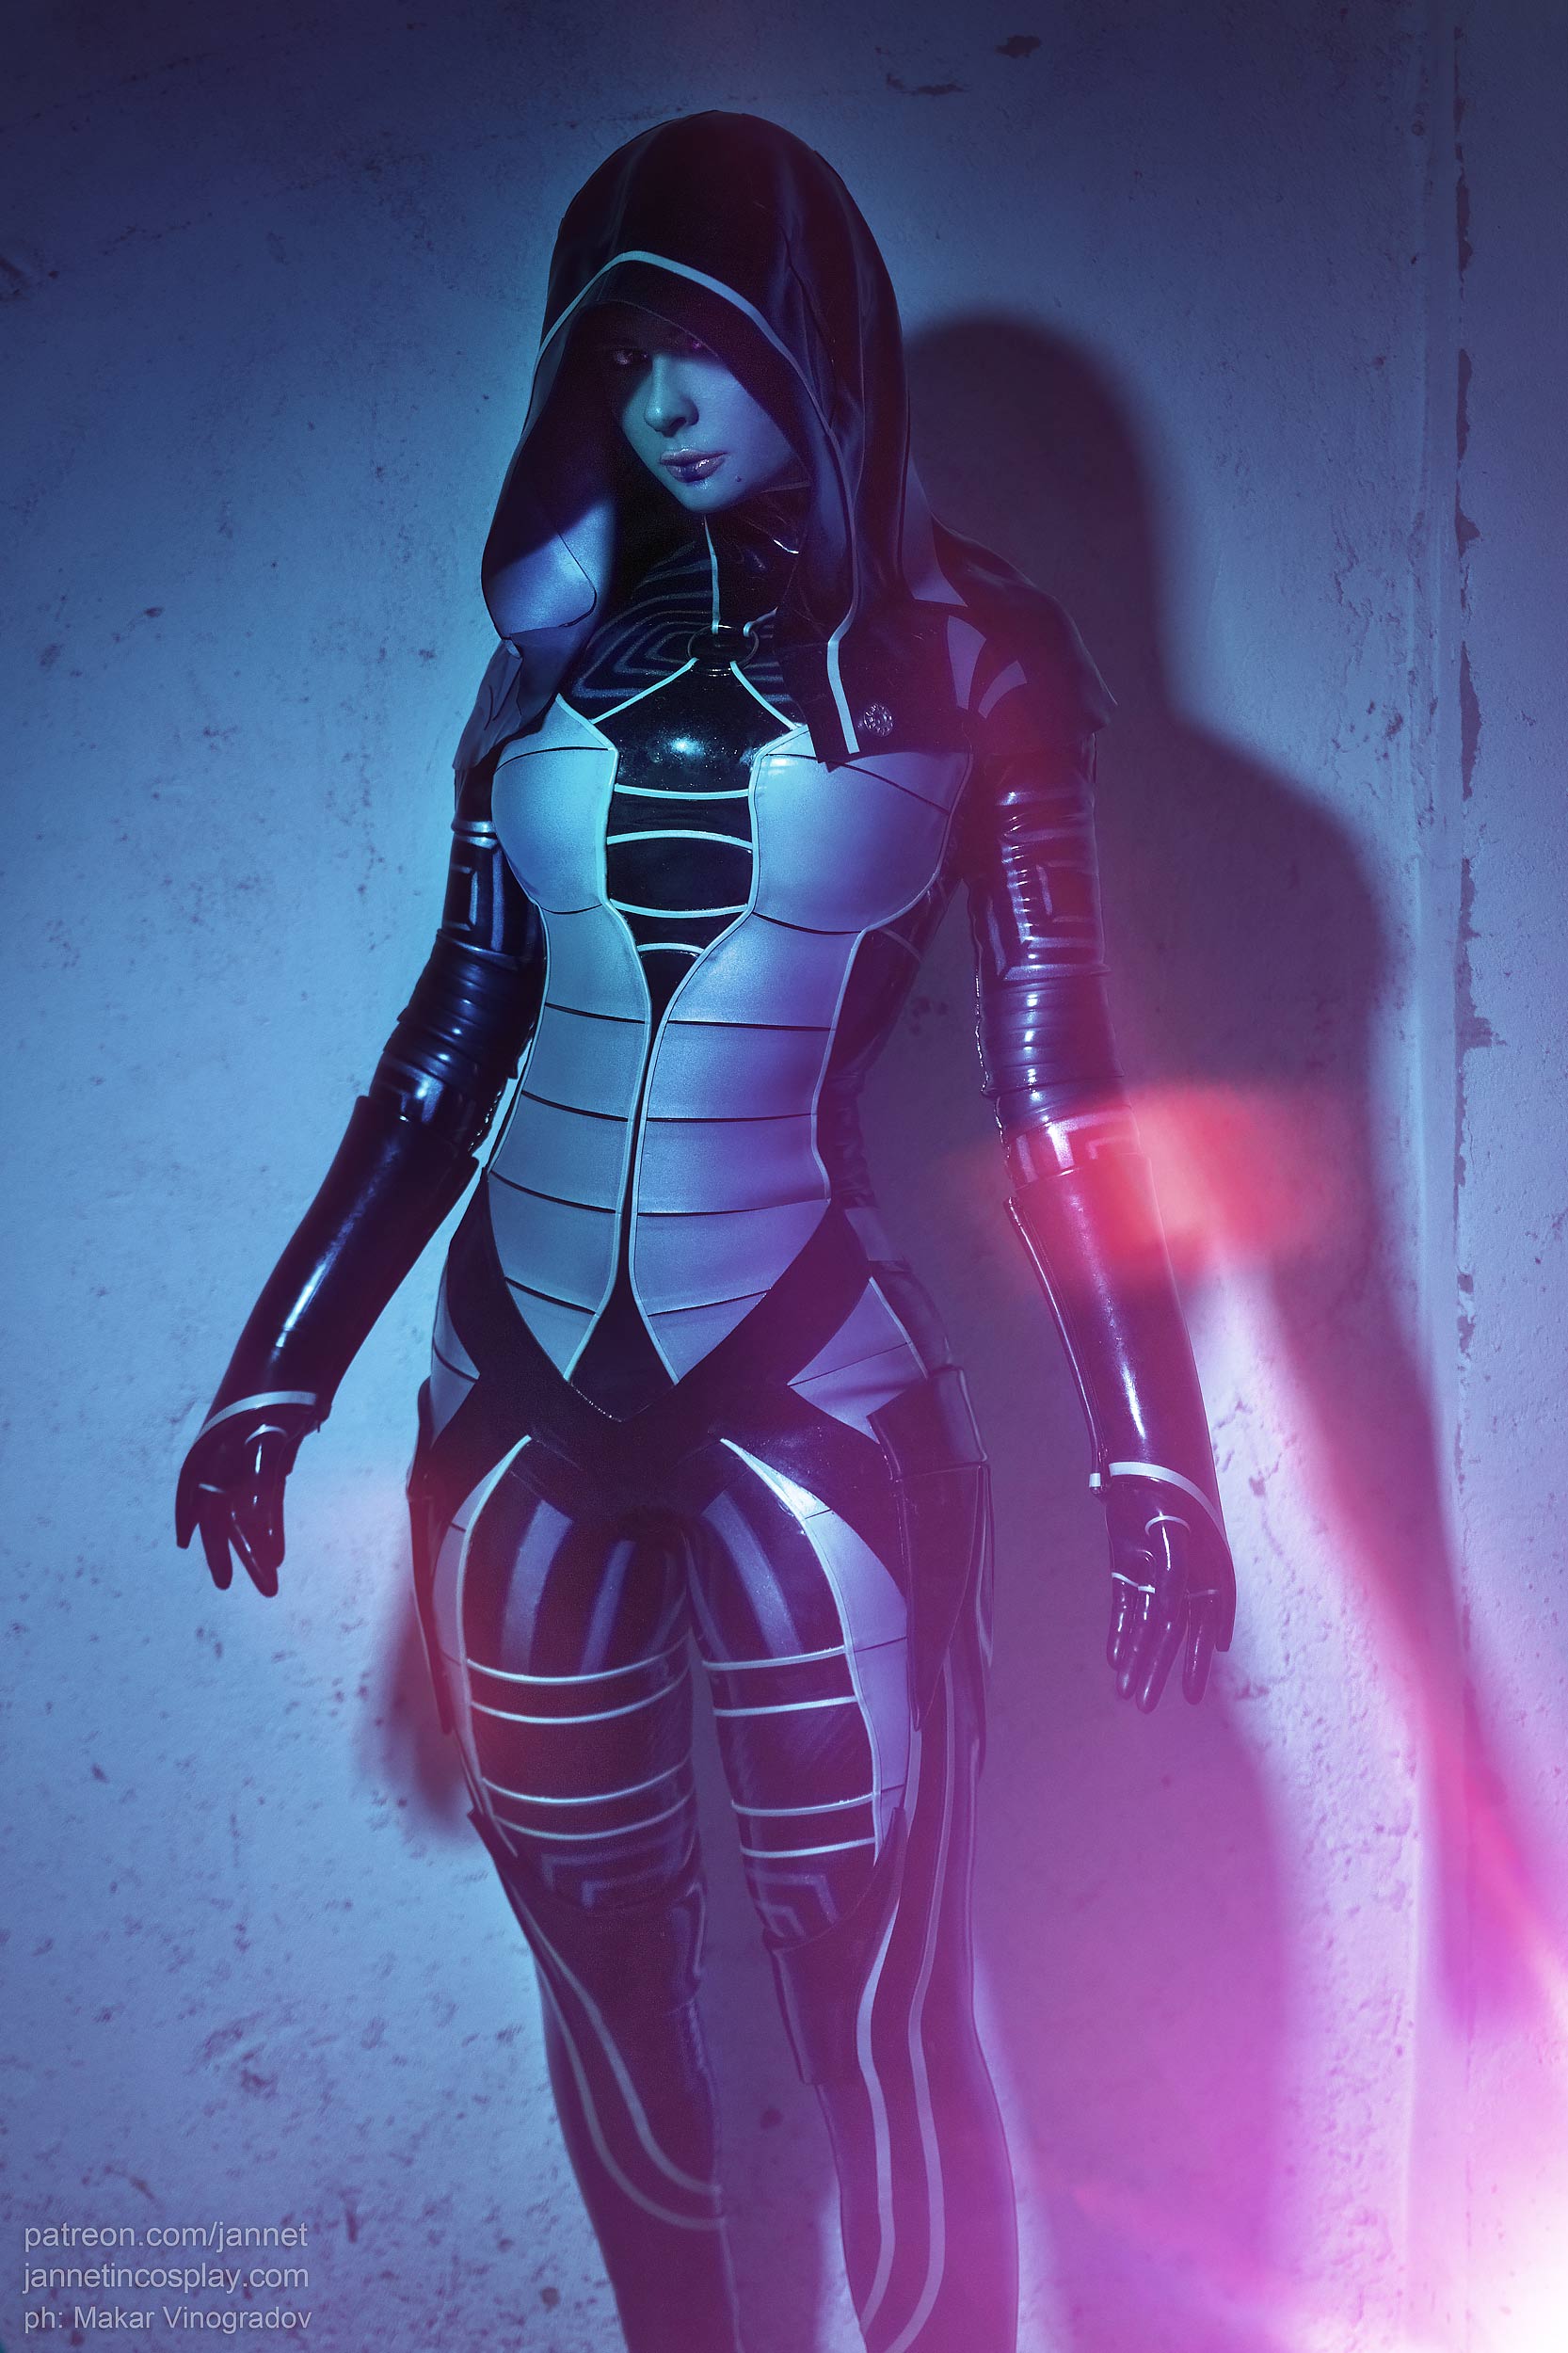 Kasumi From Mass Effect Porn - Kasumi Goto (Mass Effect), by JannetIncosplay.~